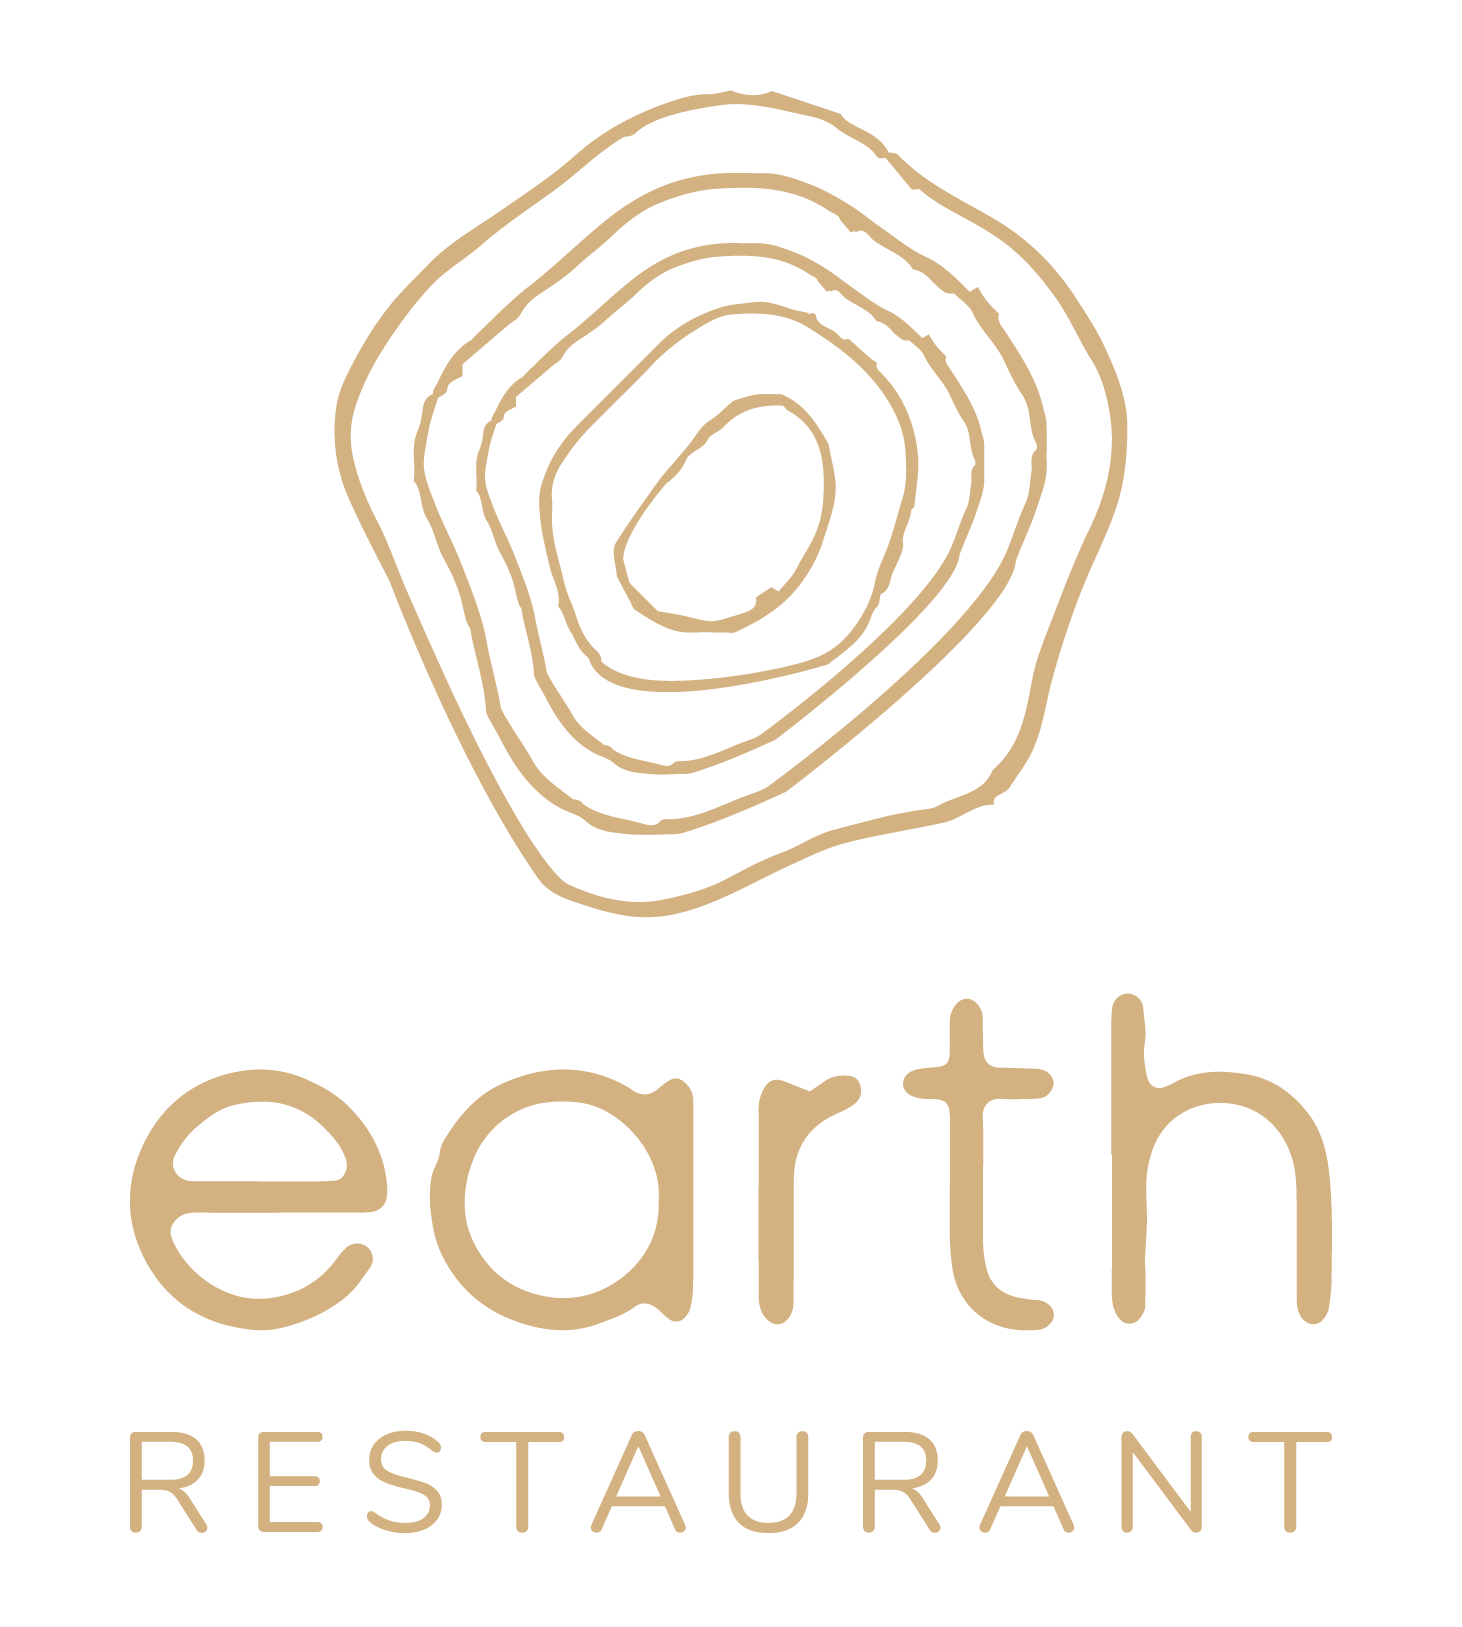 Earth Restaurant